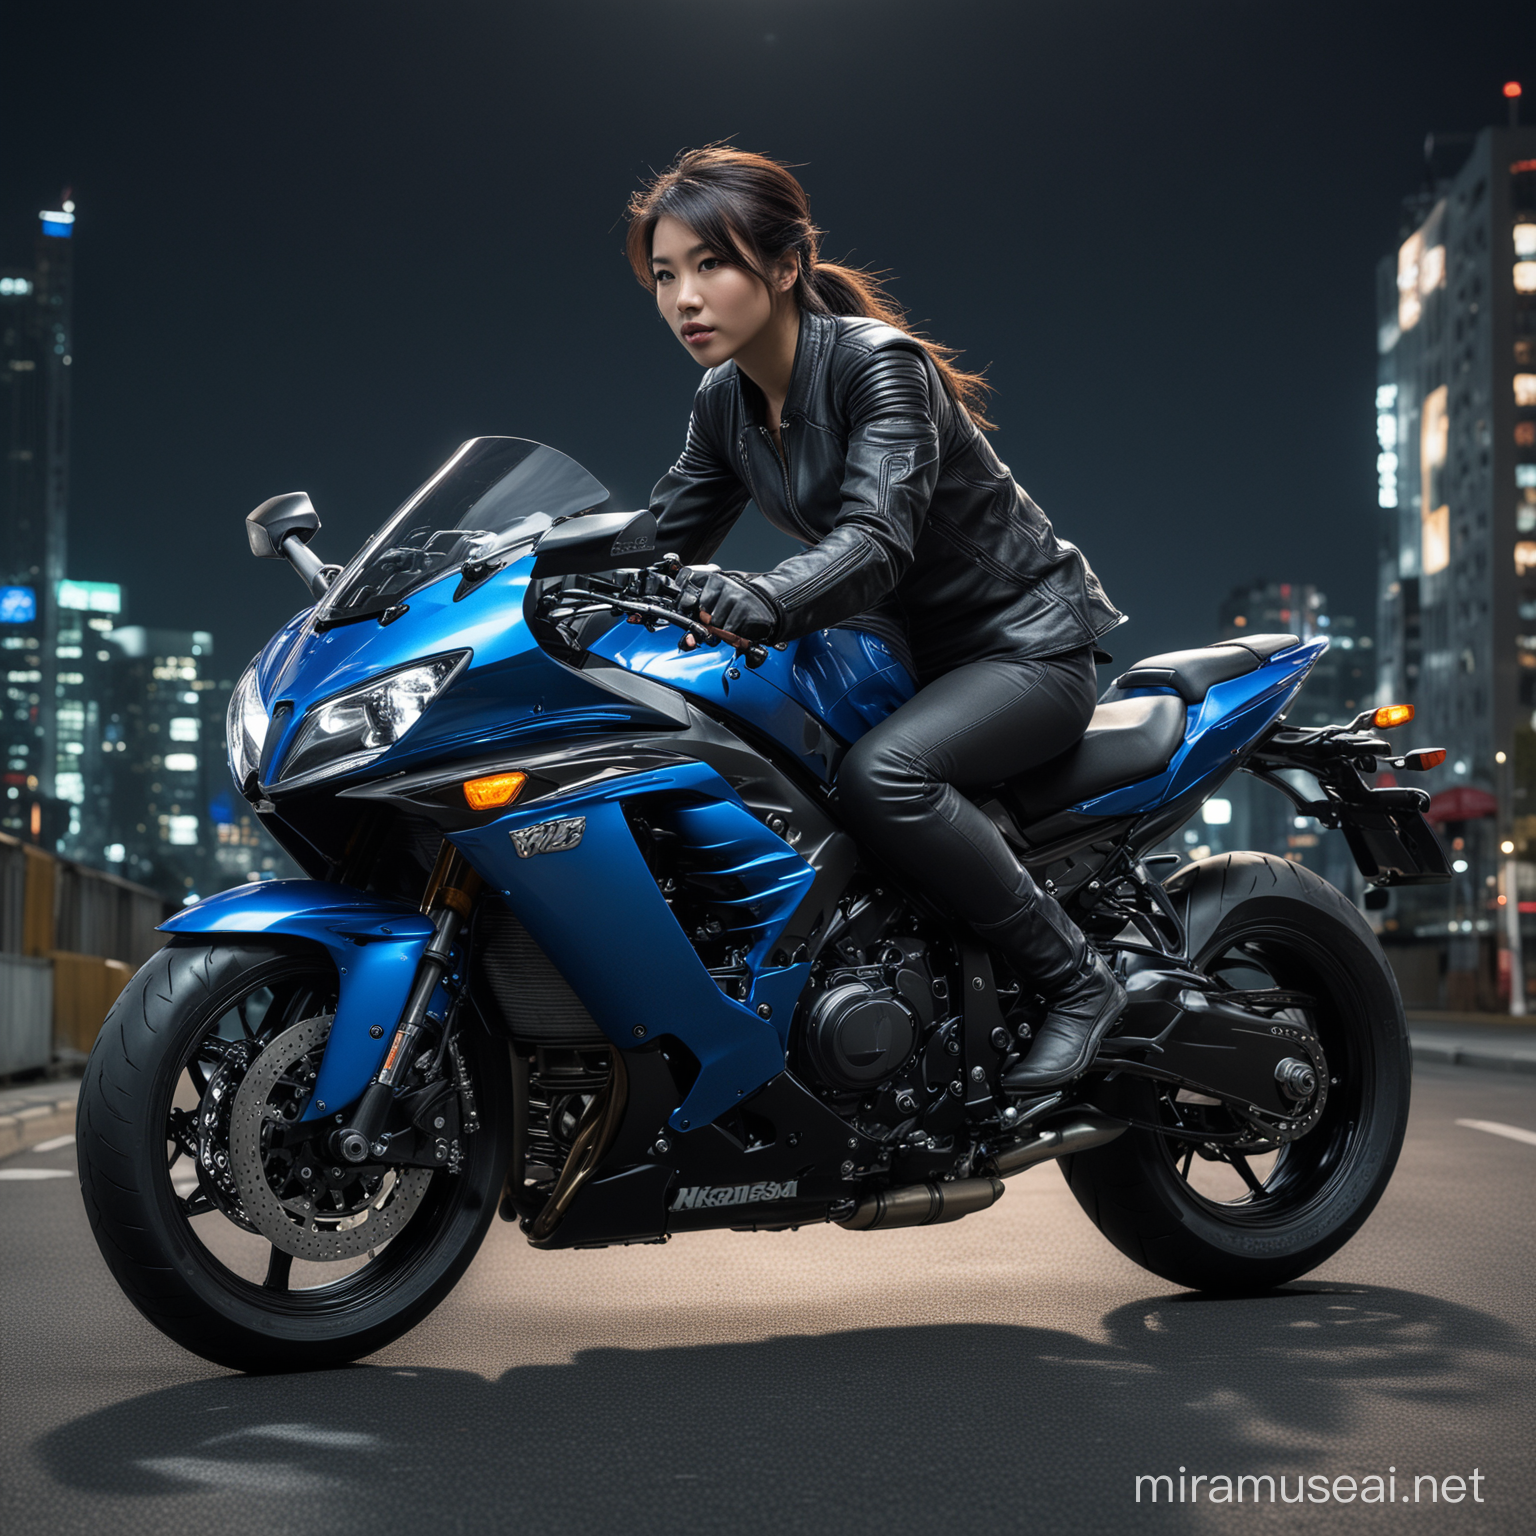 Beautiful Asian Woman on Sleek Blue Kawasaki Ninja 1000RR Motorcycle at Night